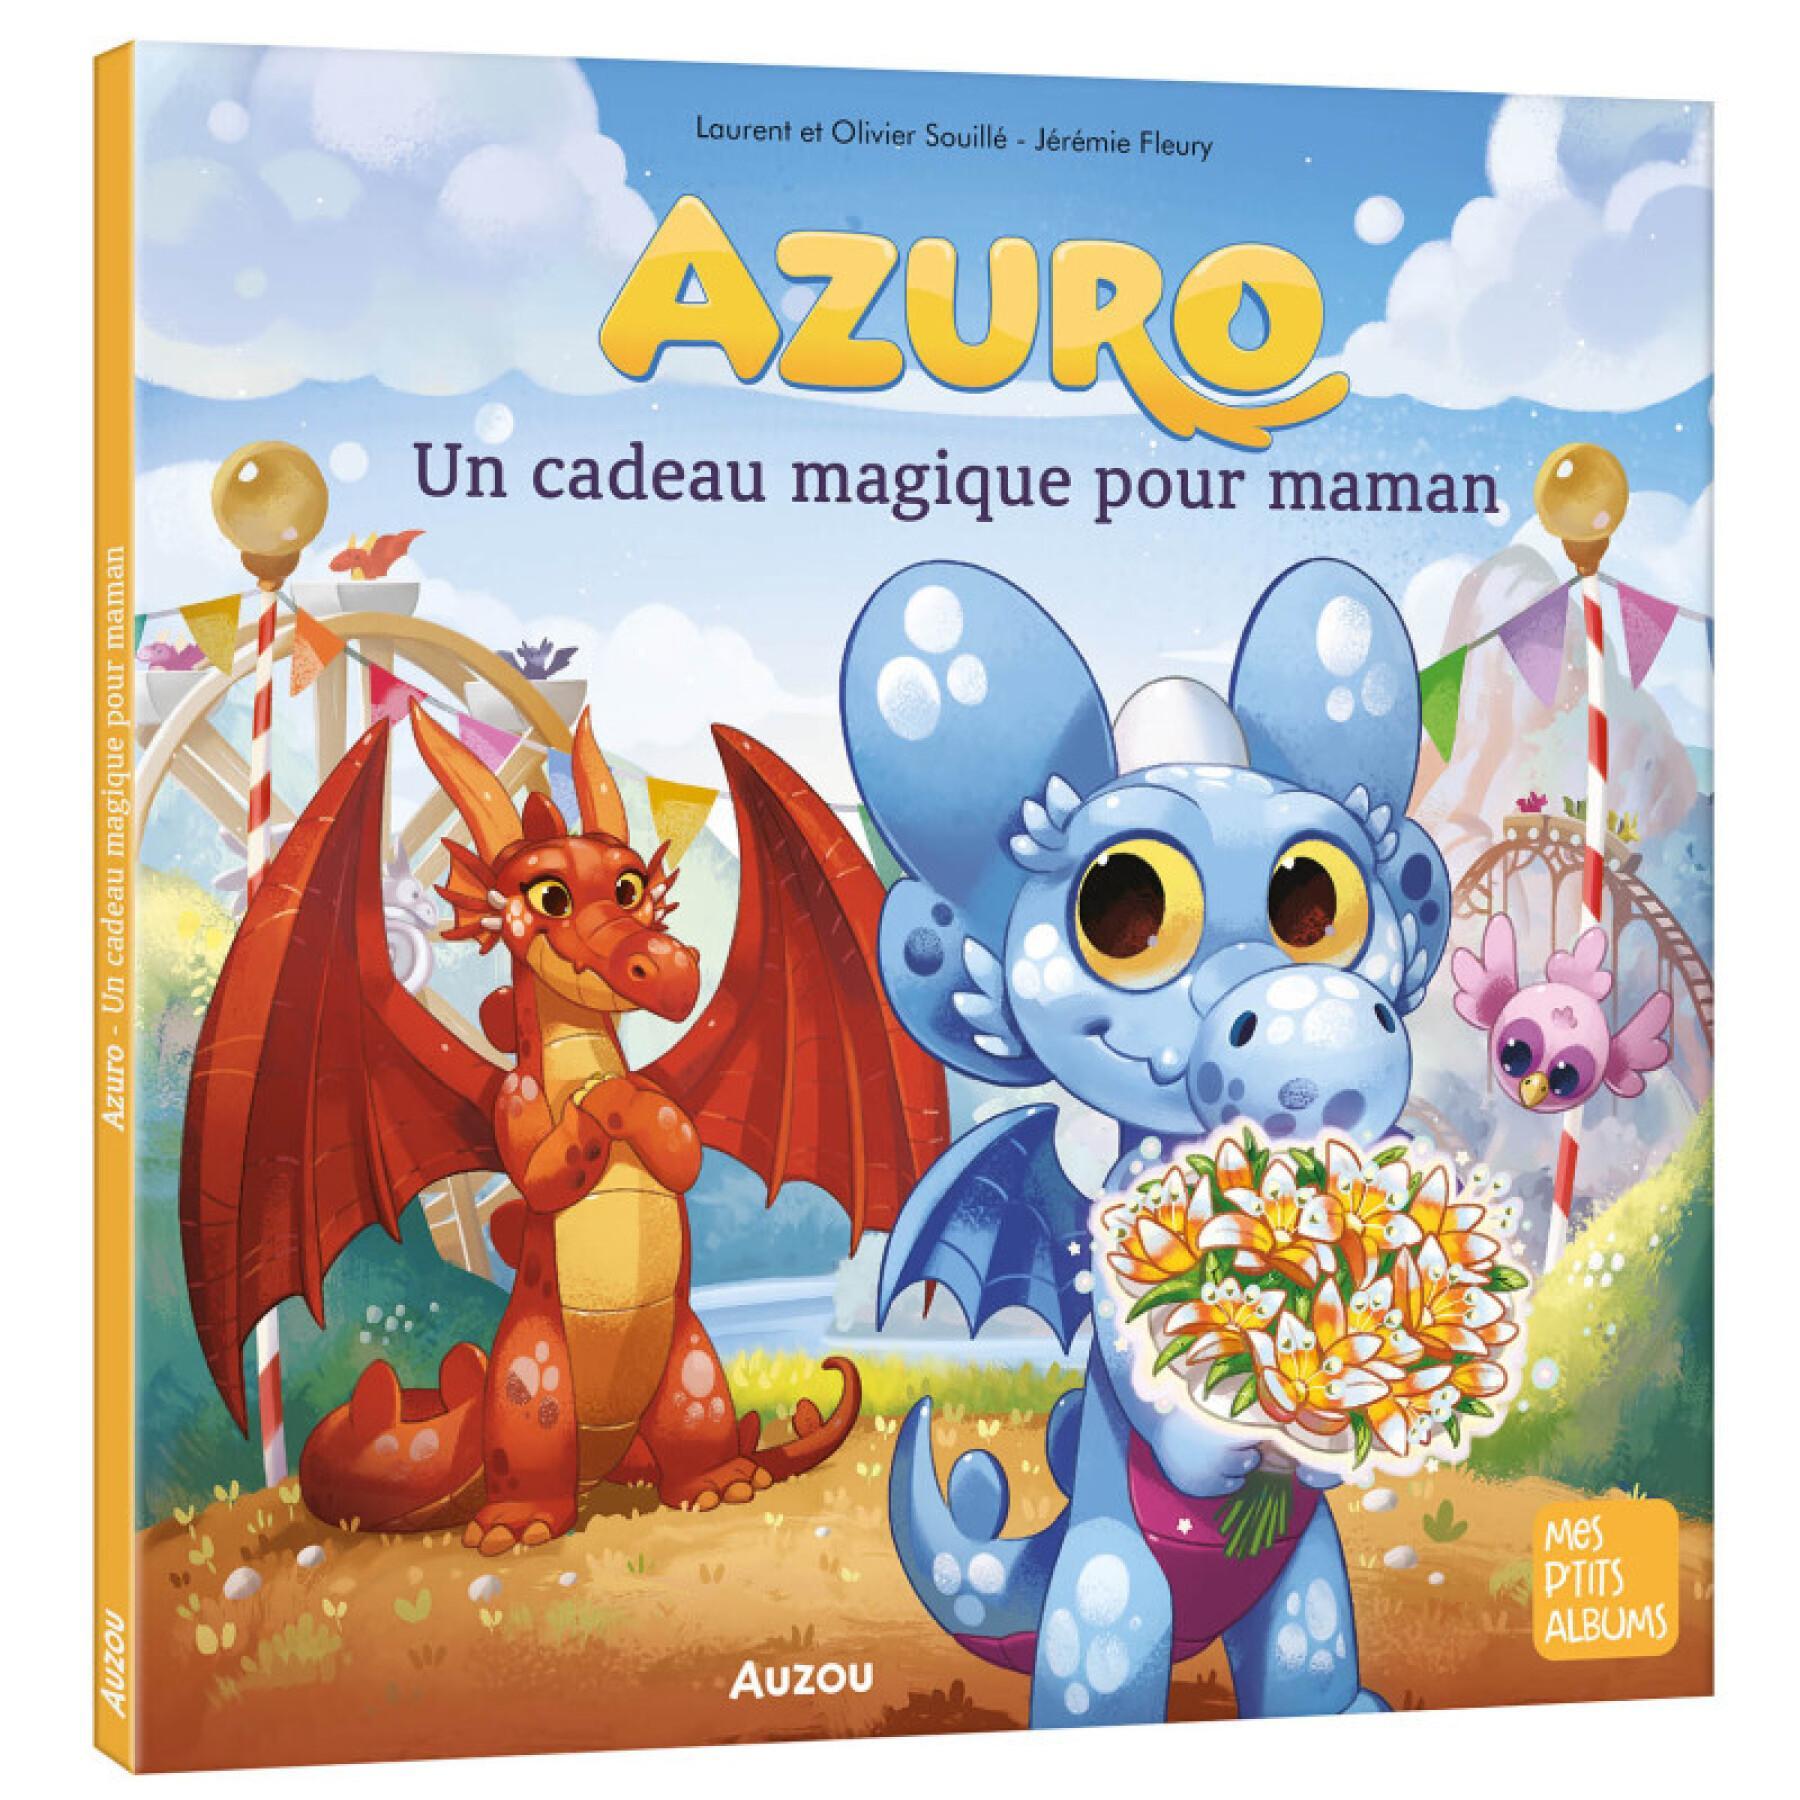 Book for azuro a magical gift for mom Auzou